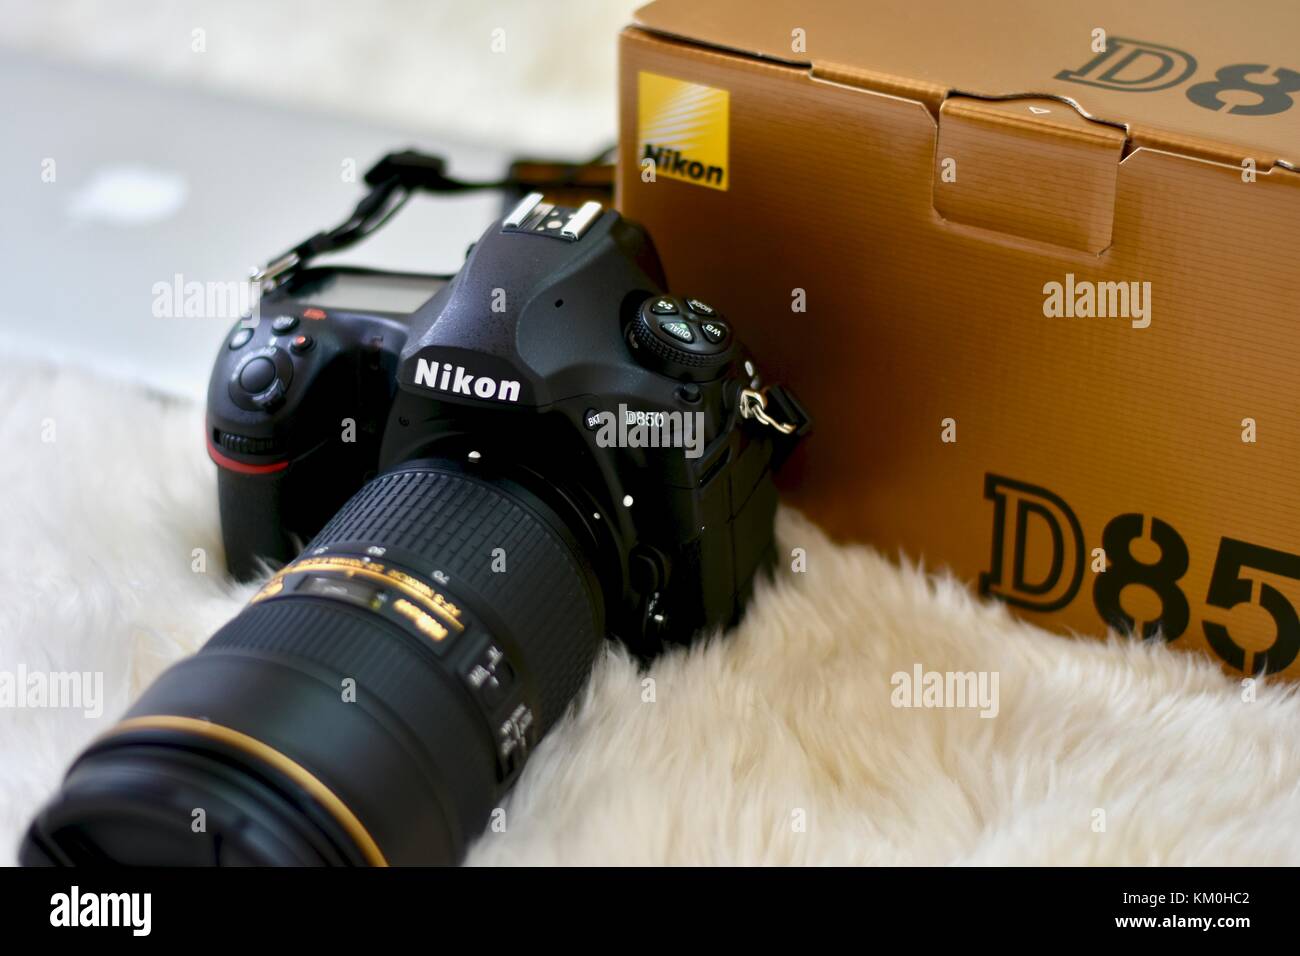 Nikon d850 hi-res stock photography and images - Alamy